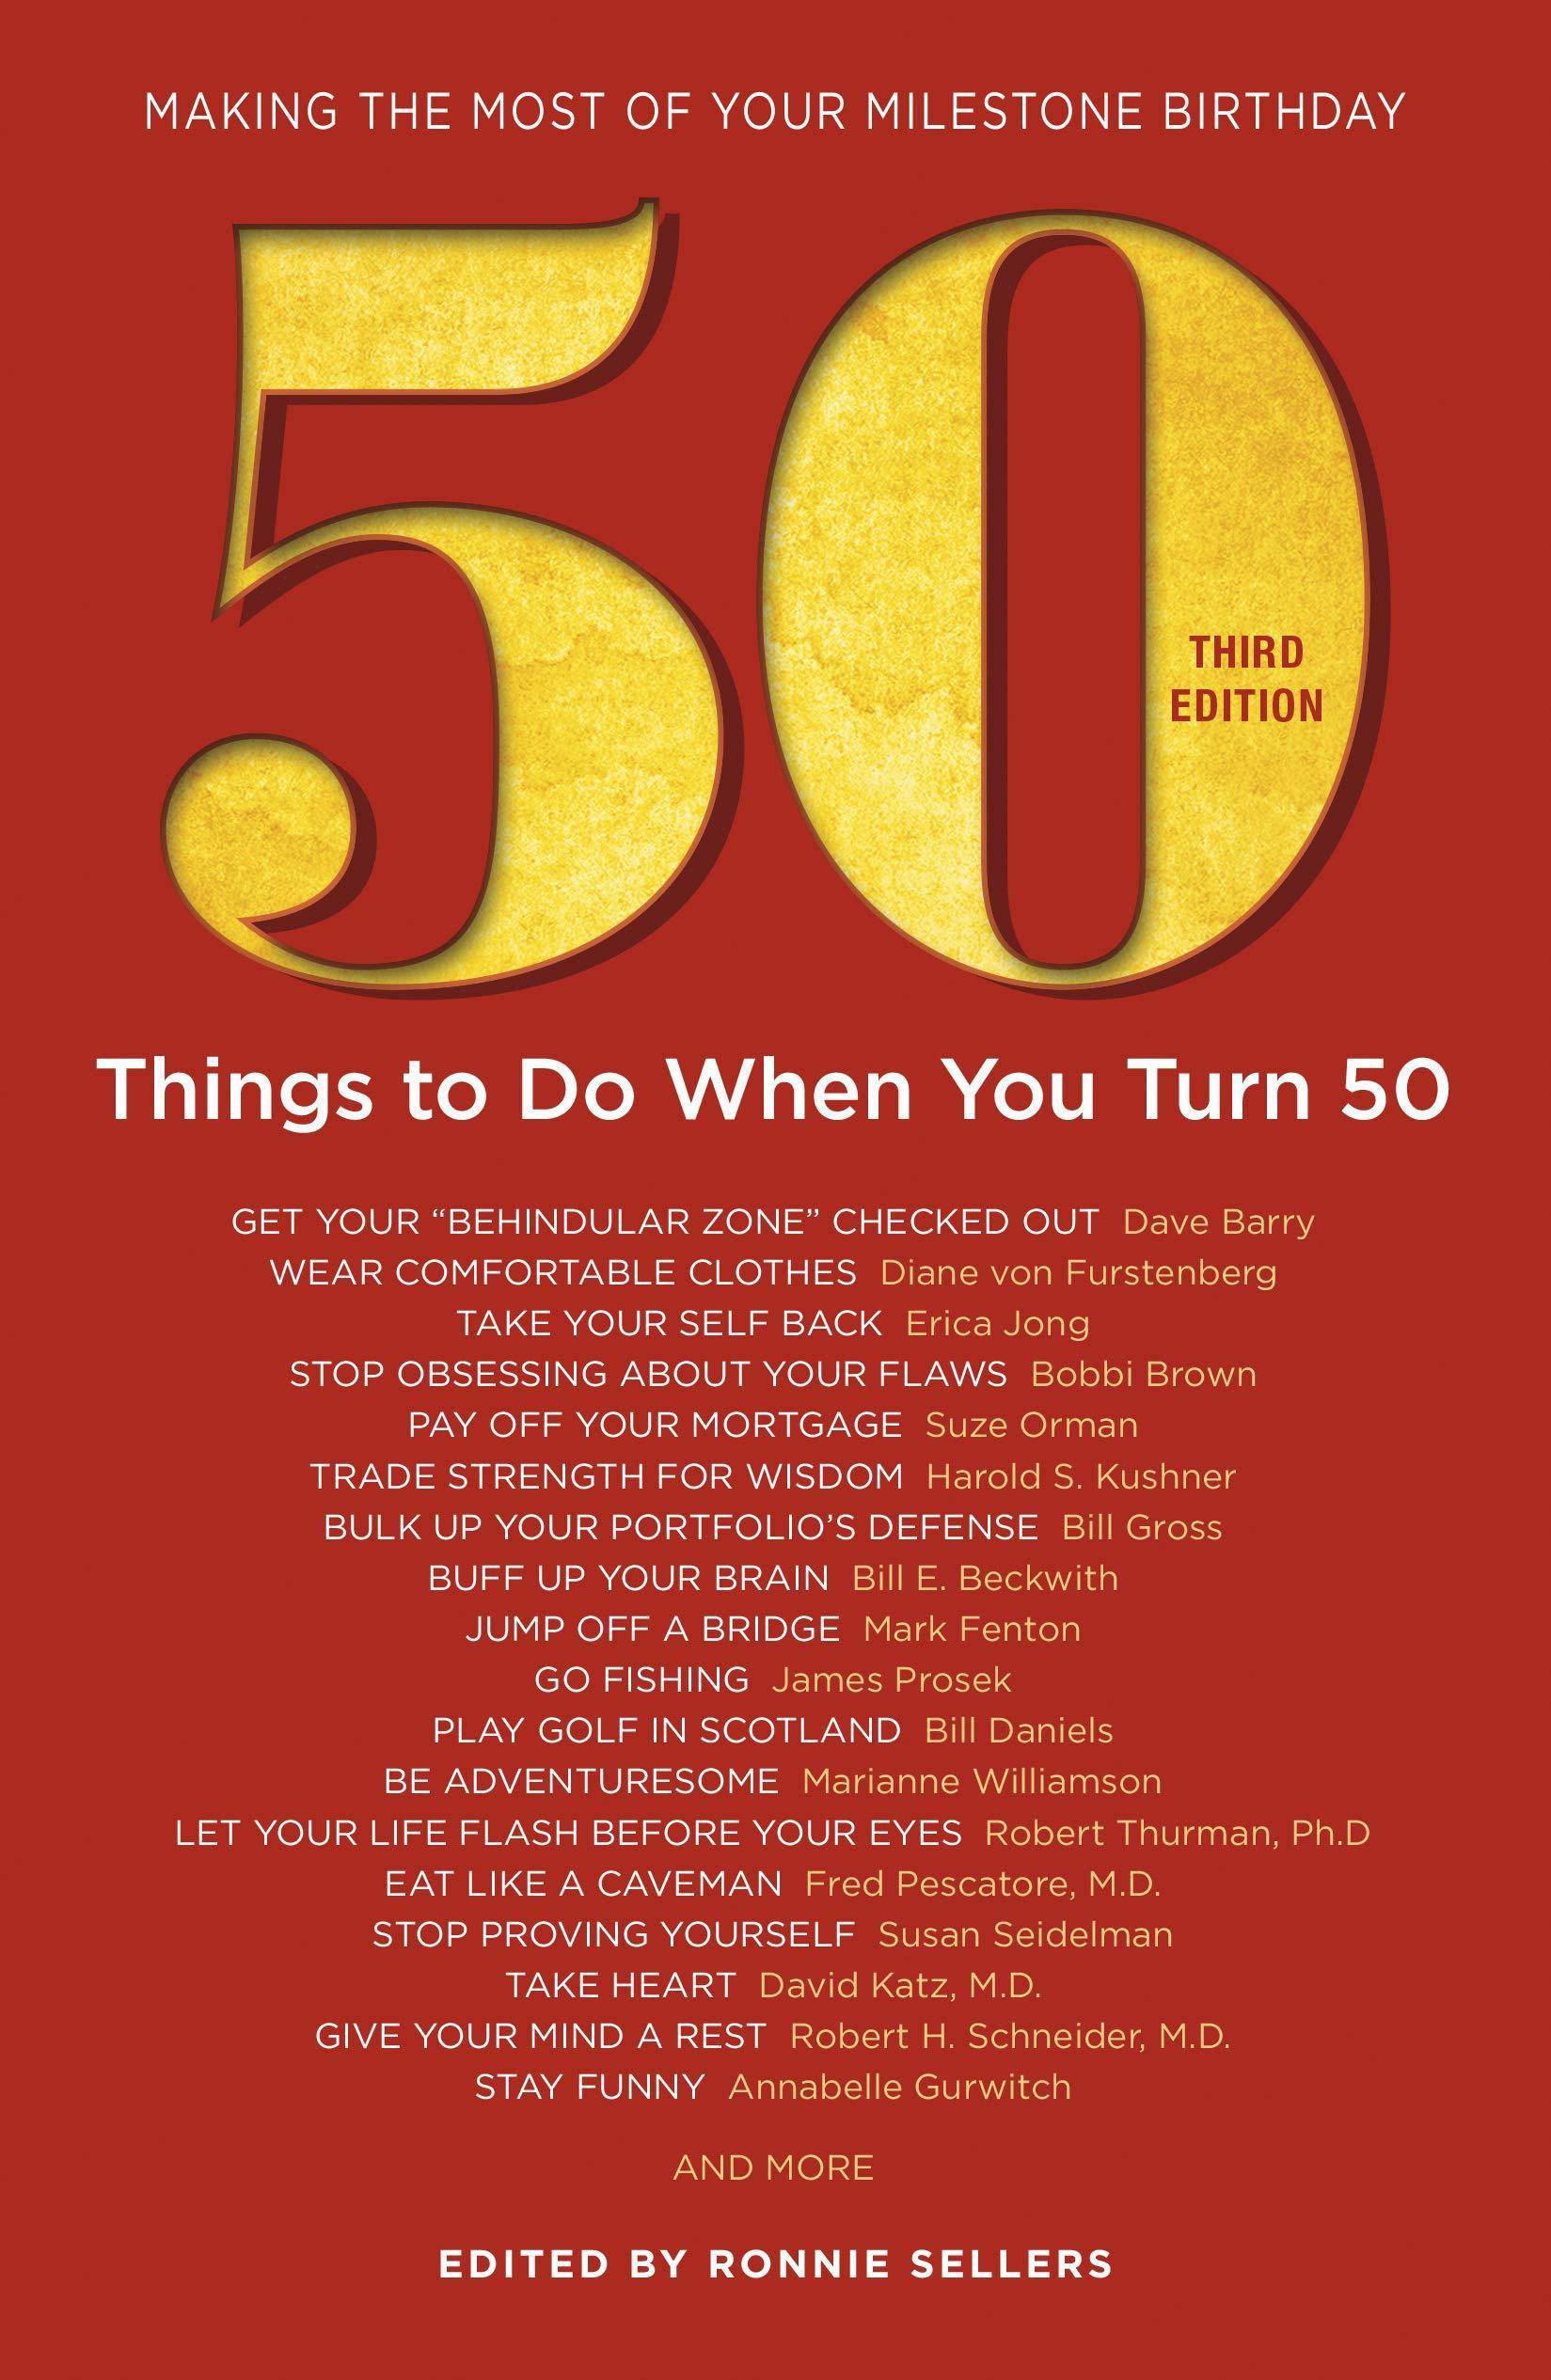 50 Things to Do When You Turn 50 - SureShot Books Publishing LLC